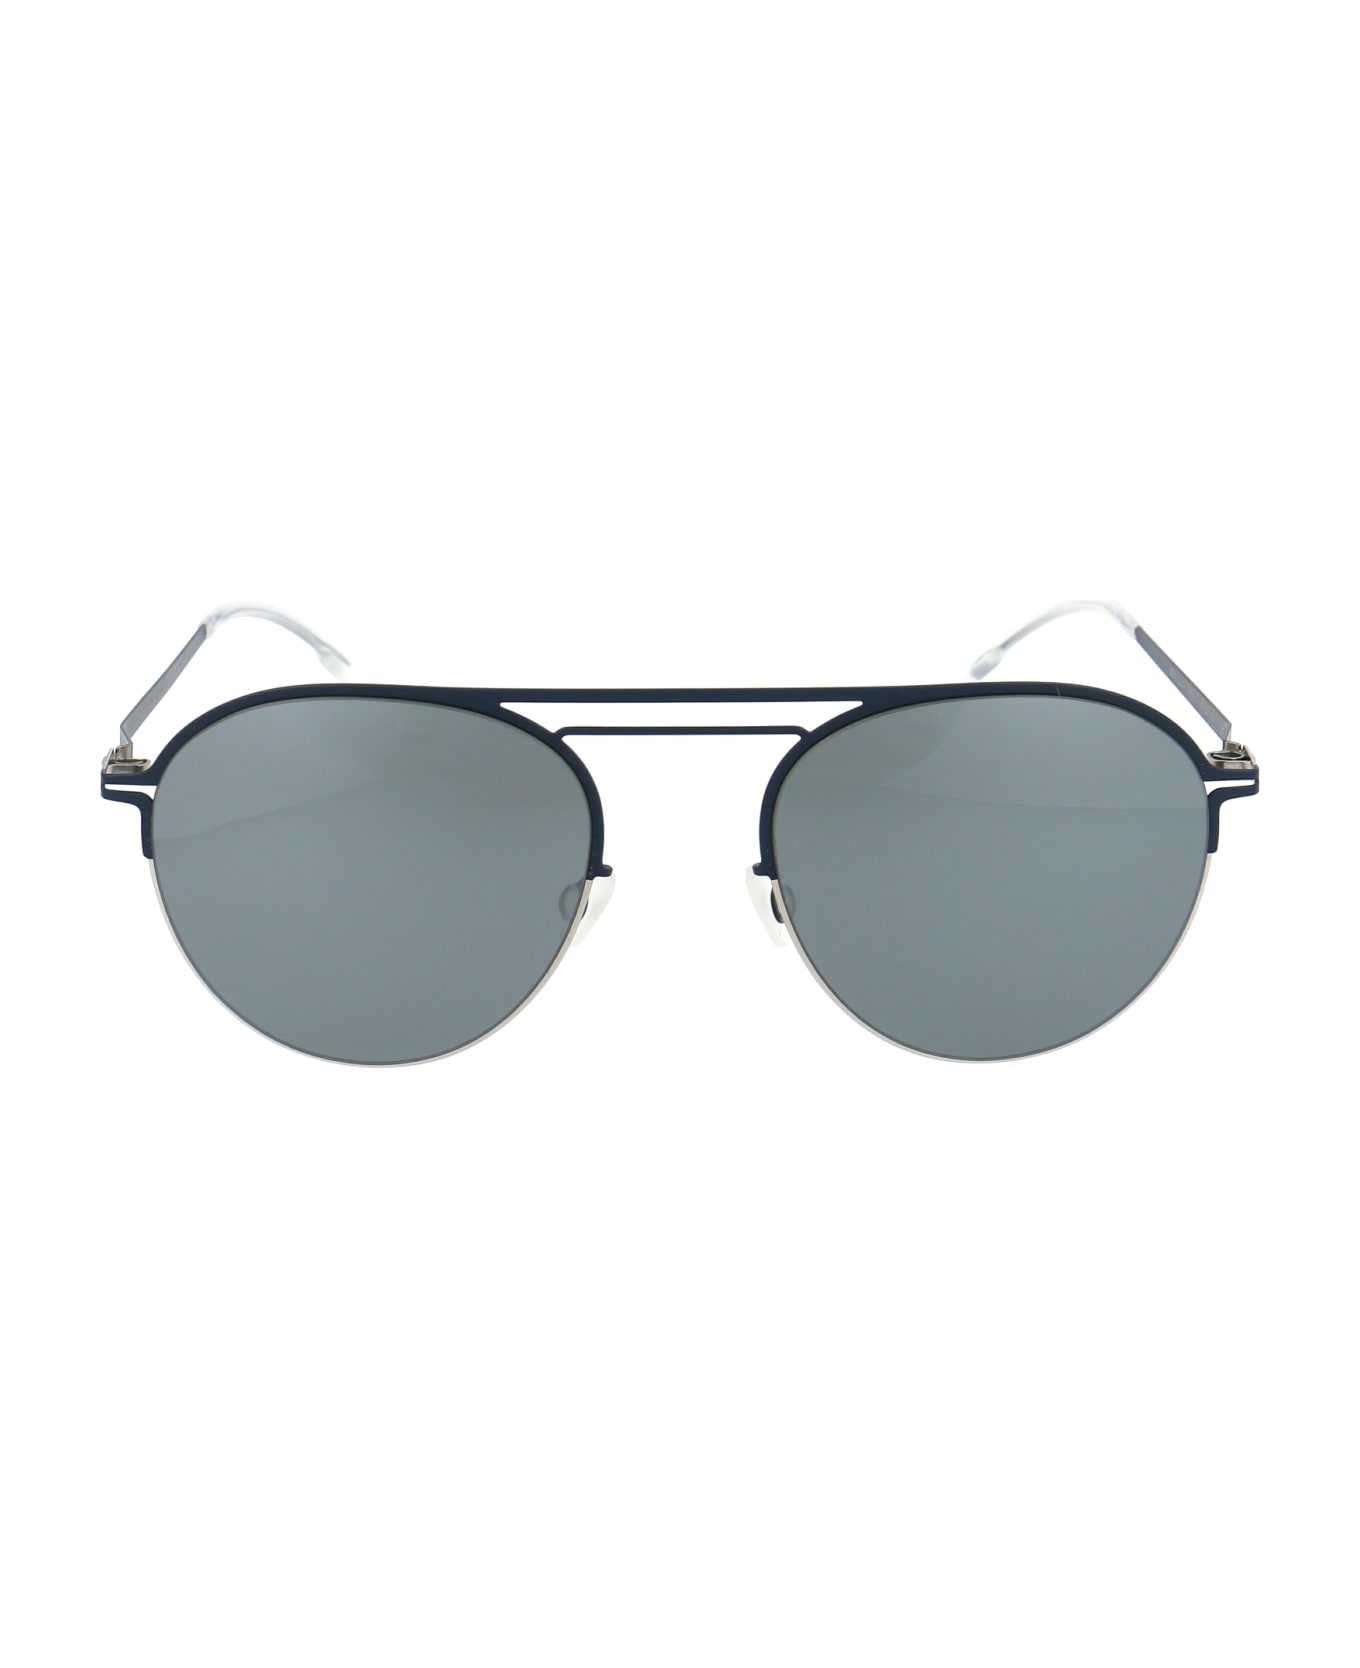 Mykita Duane Sunglasses - 091 Silver/Navy Light Silver Flash サングラス